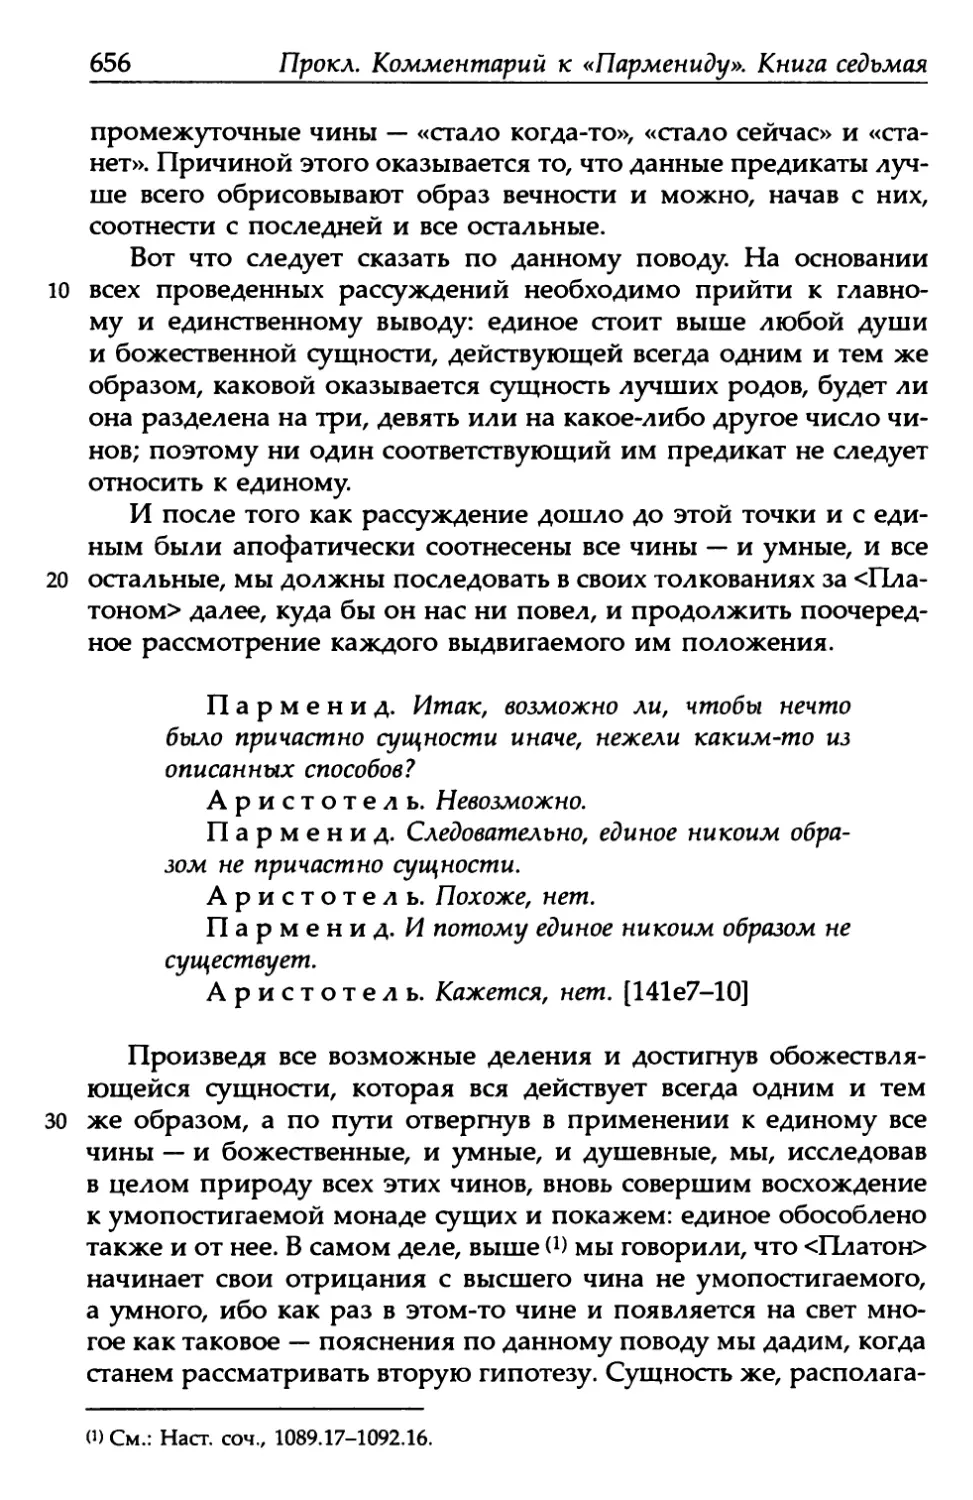 «Парменид», 141е7-10